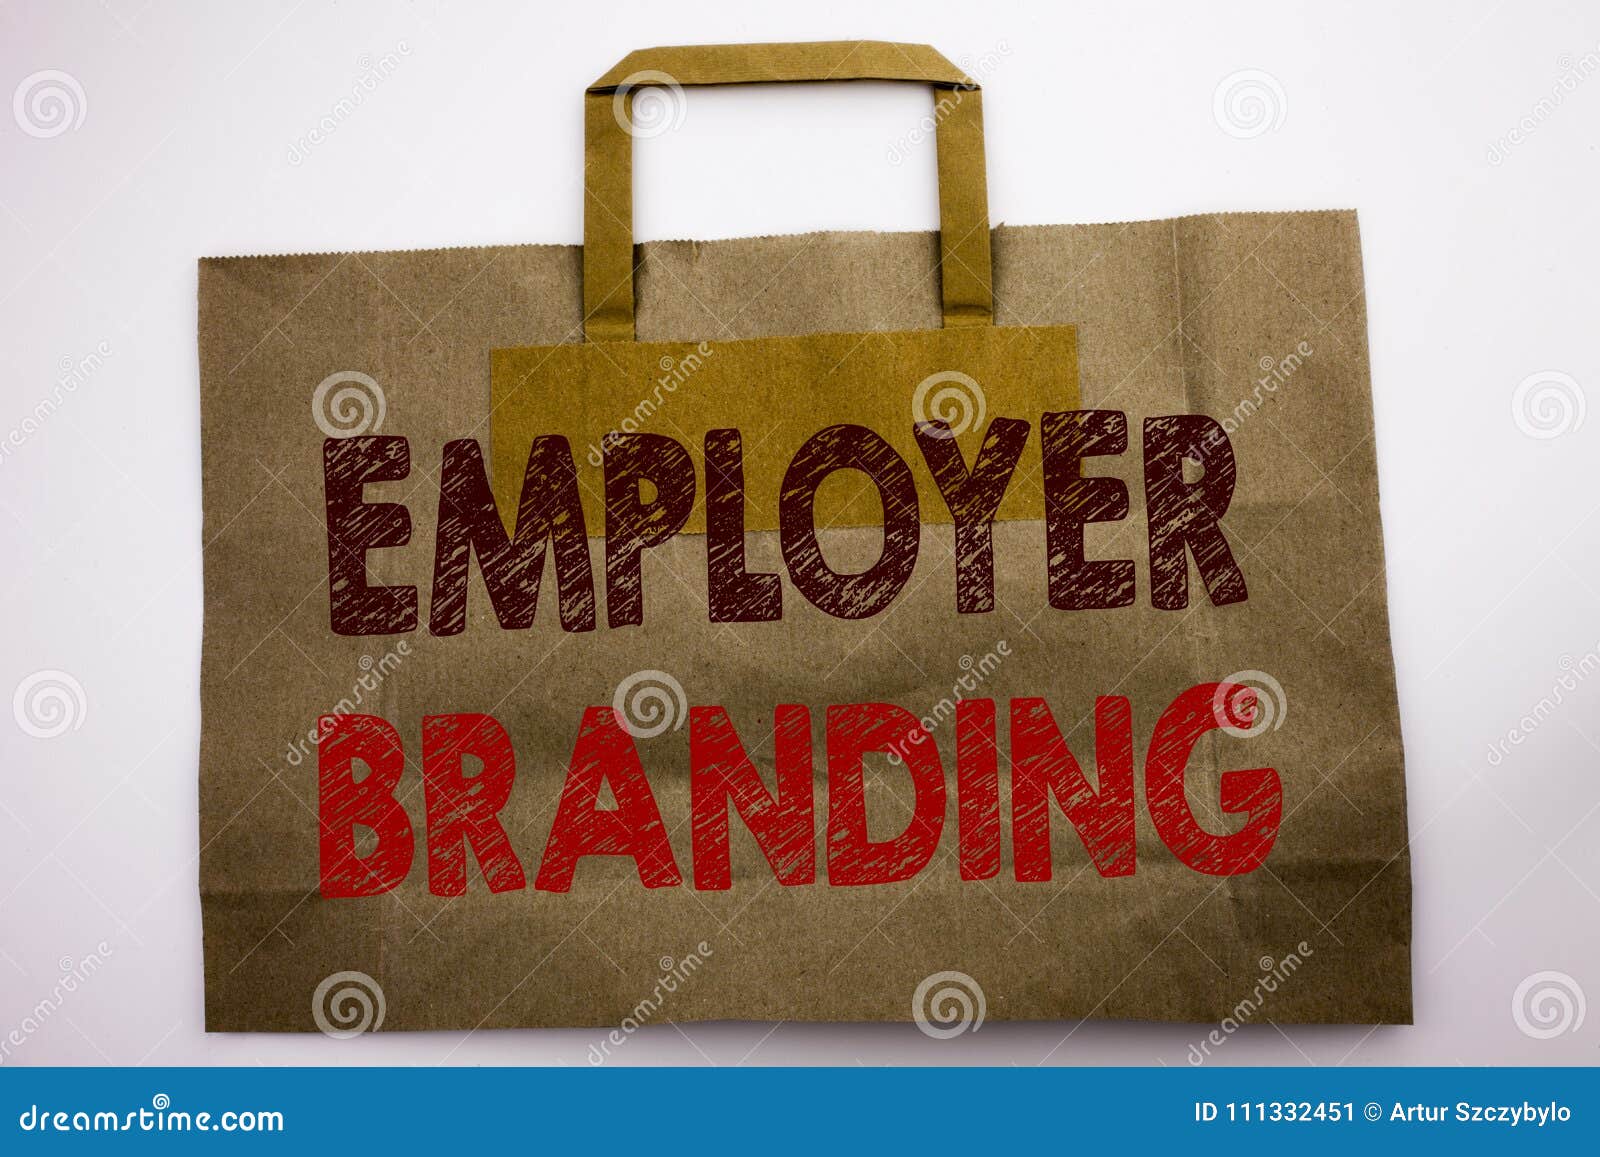 word, writing employer branding. business concept for brand building written on shopping bag, white  background.